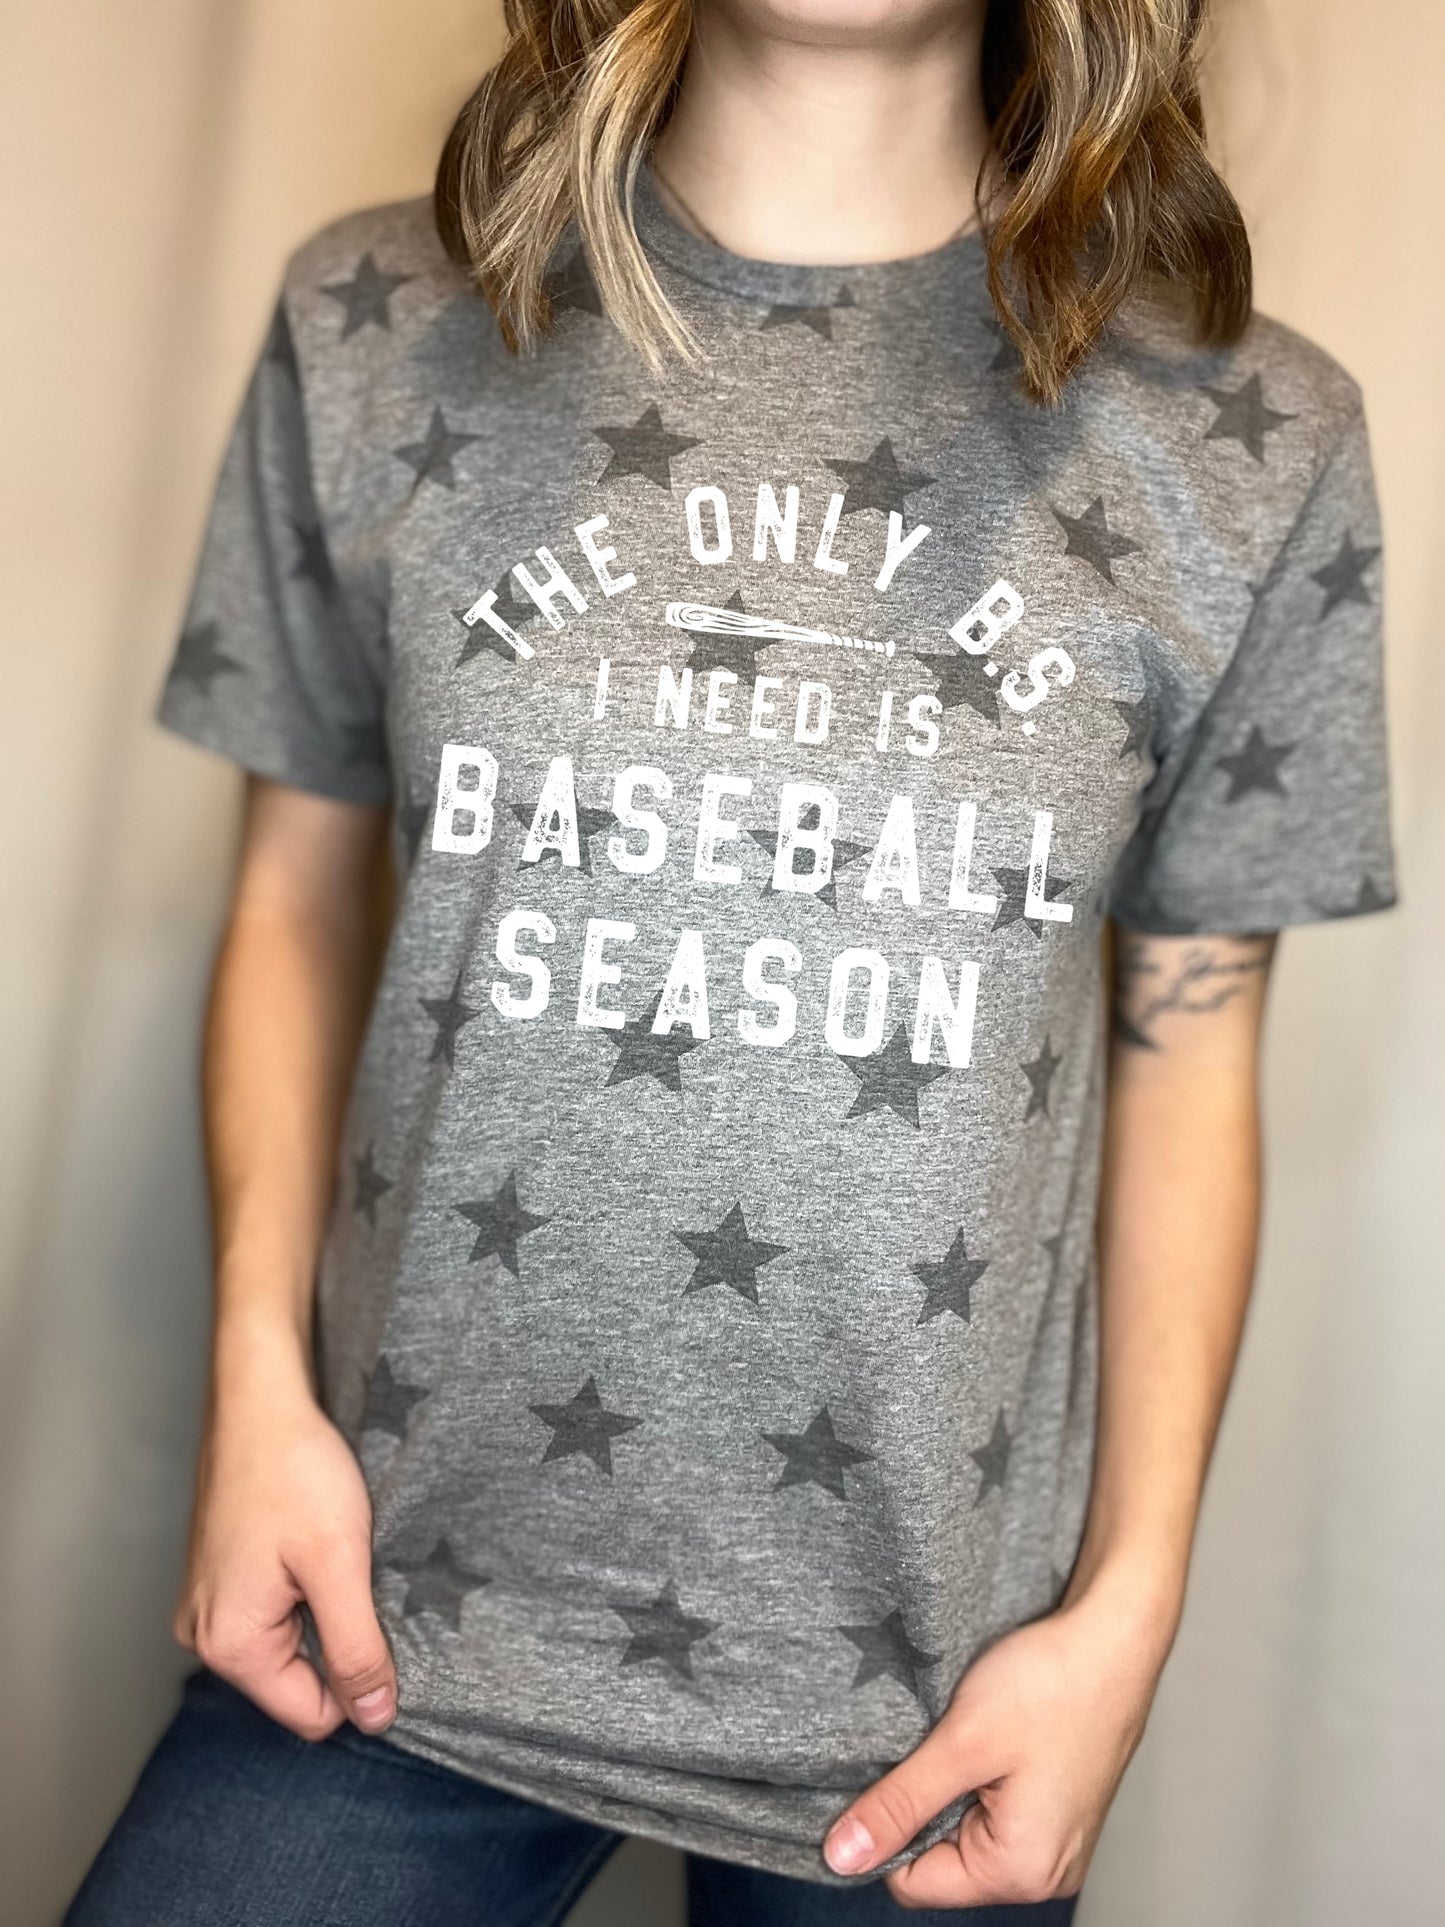 Star Printed Tee-  The Only BS I Need Is Baseball Season Shirt -  Adult Sized Tees